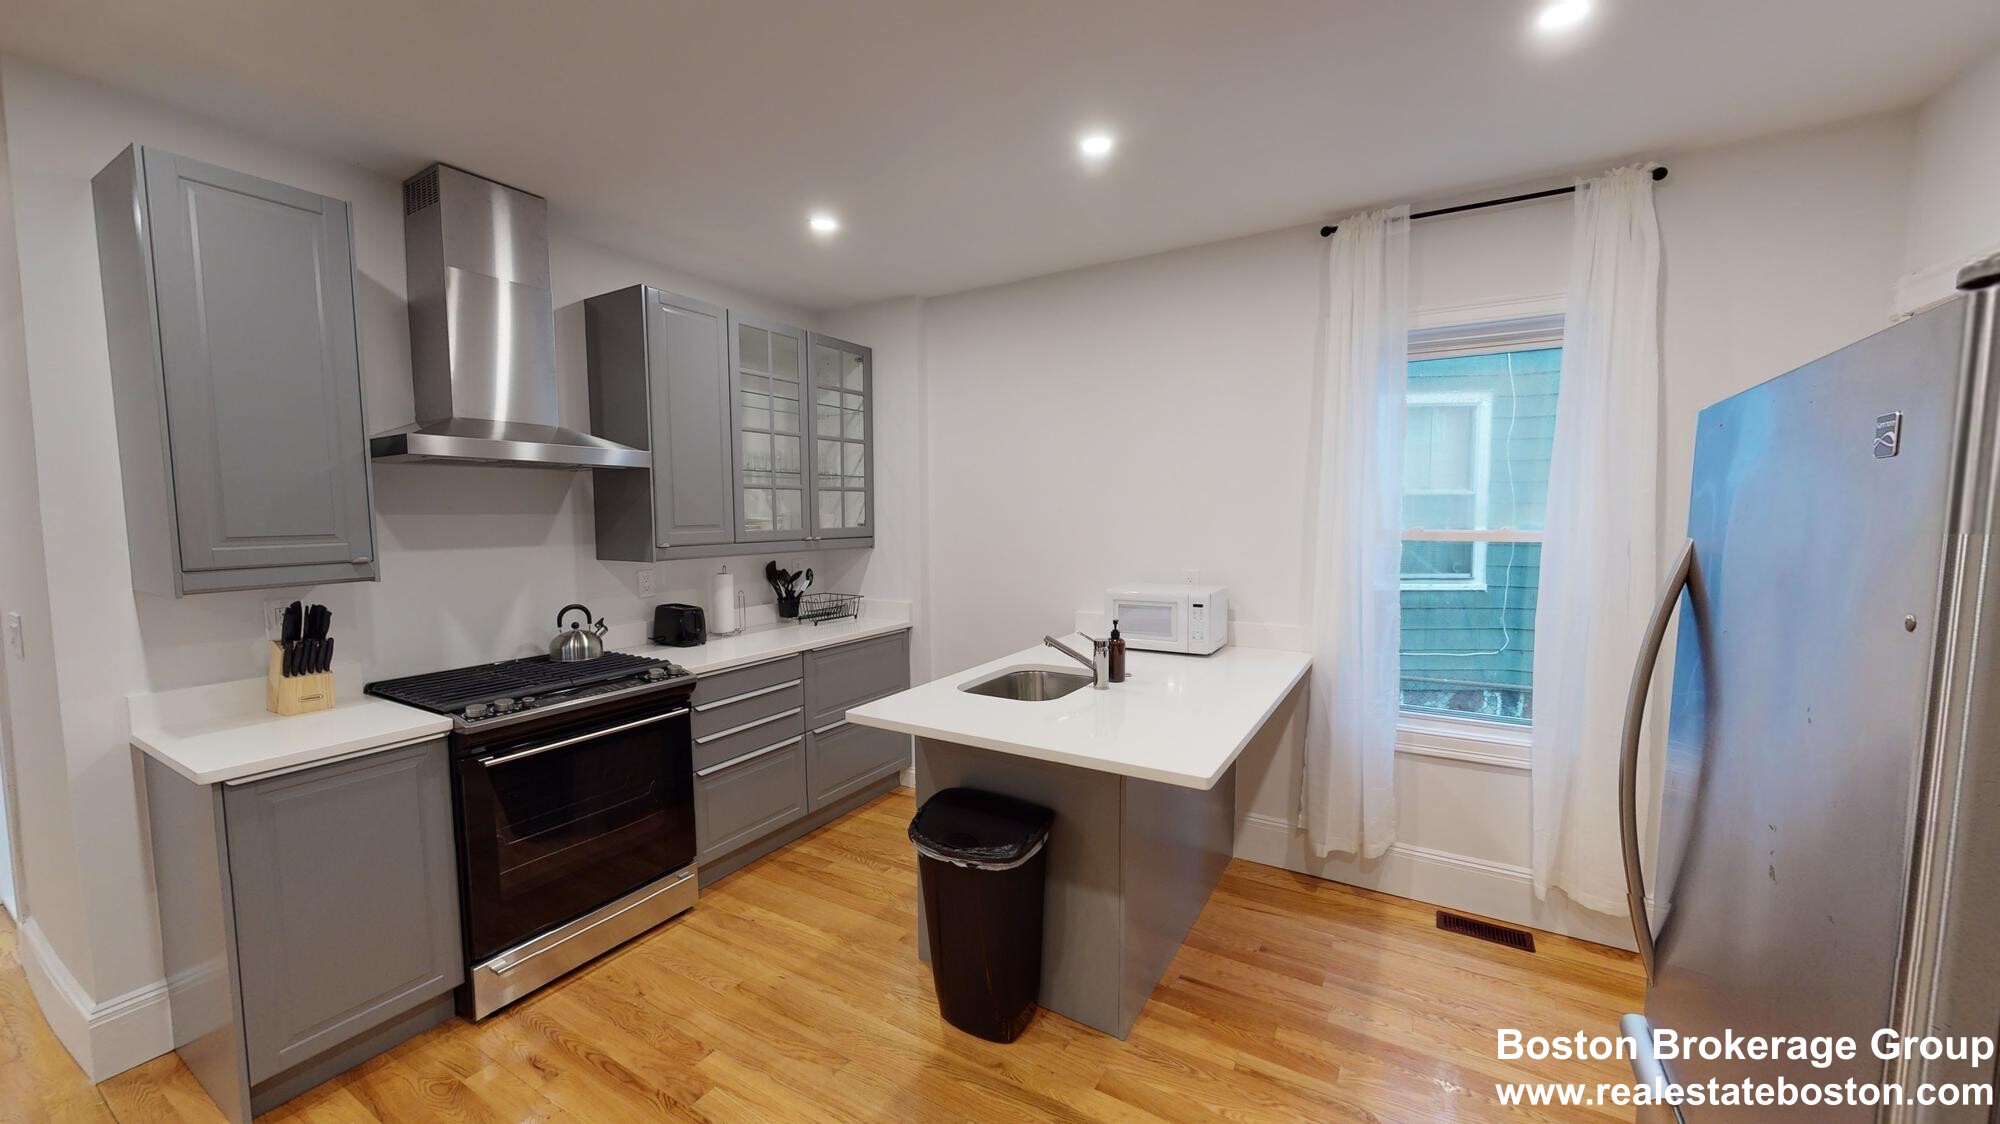 Photos of apartment on Thornley St.,Boston MA 02125